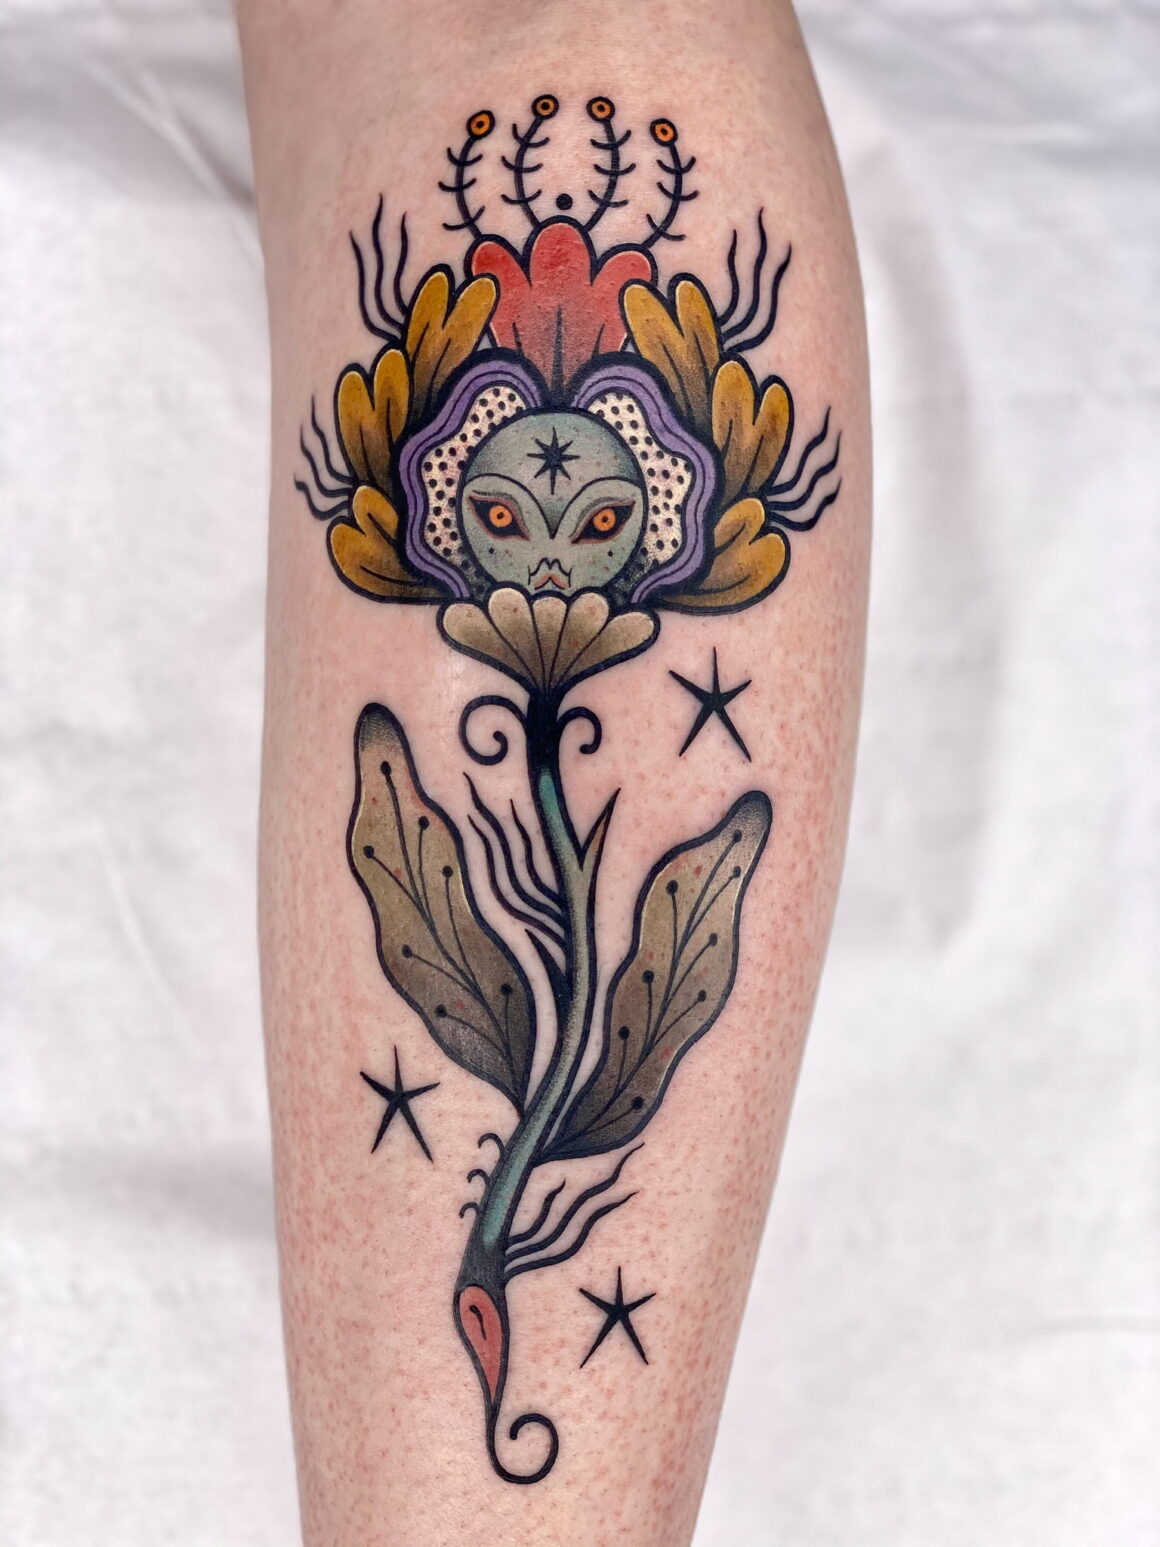 Fairy Tattoo with Delicate Design